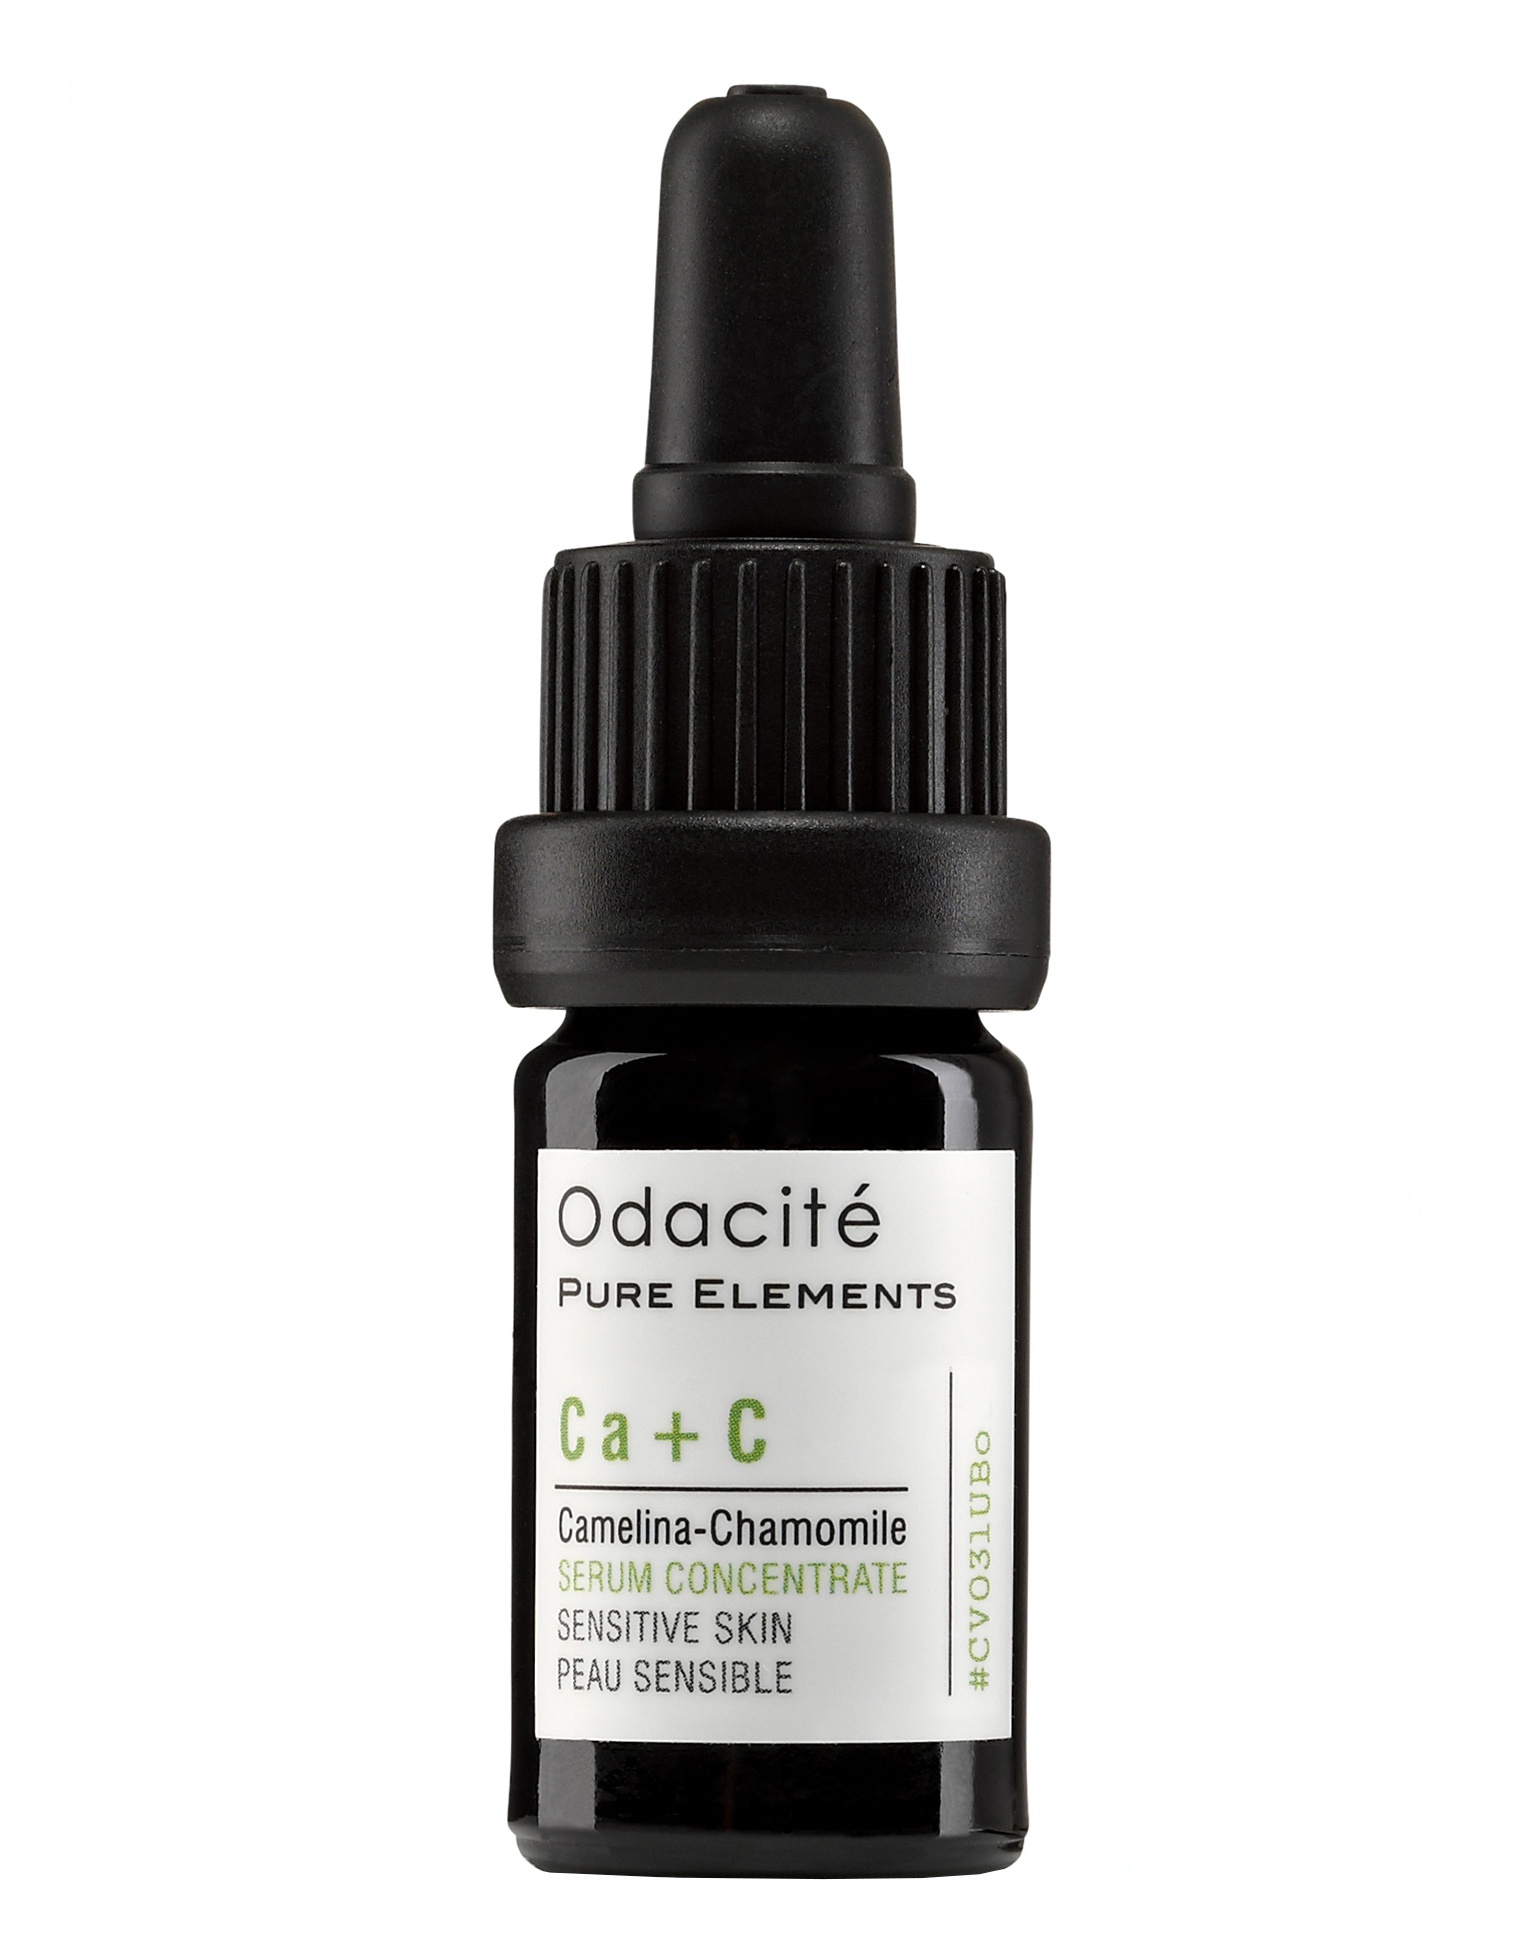 Odacite Ca+C Sensitive Skin Serum Concentrate (Camelina + Chamomille)